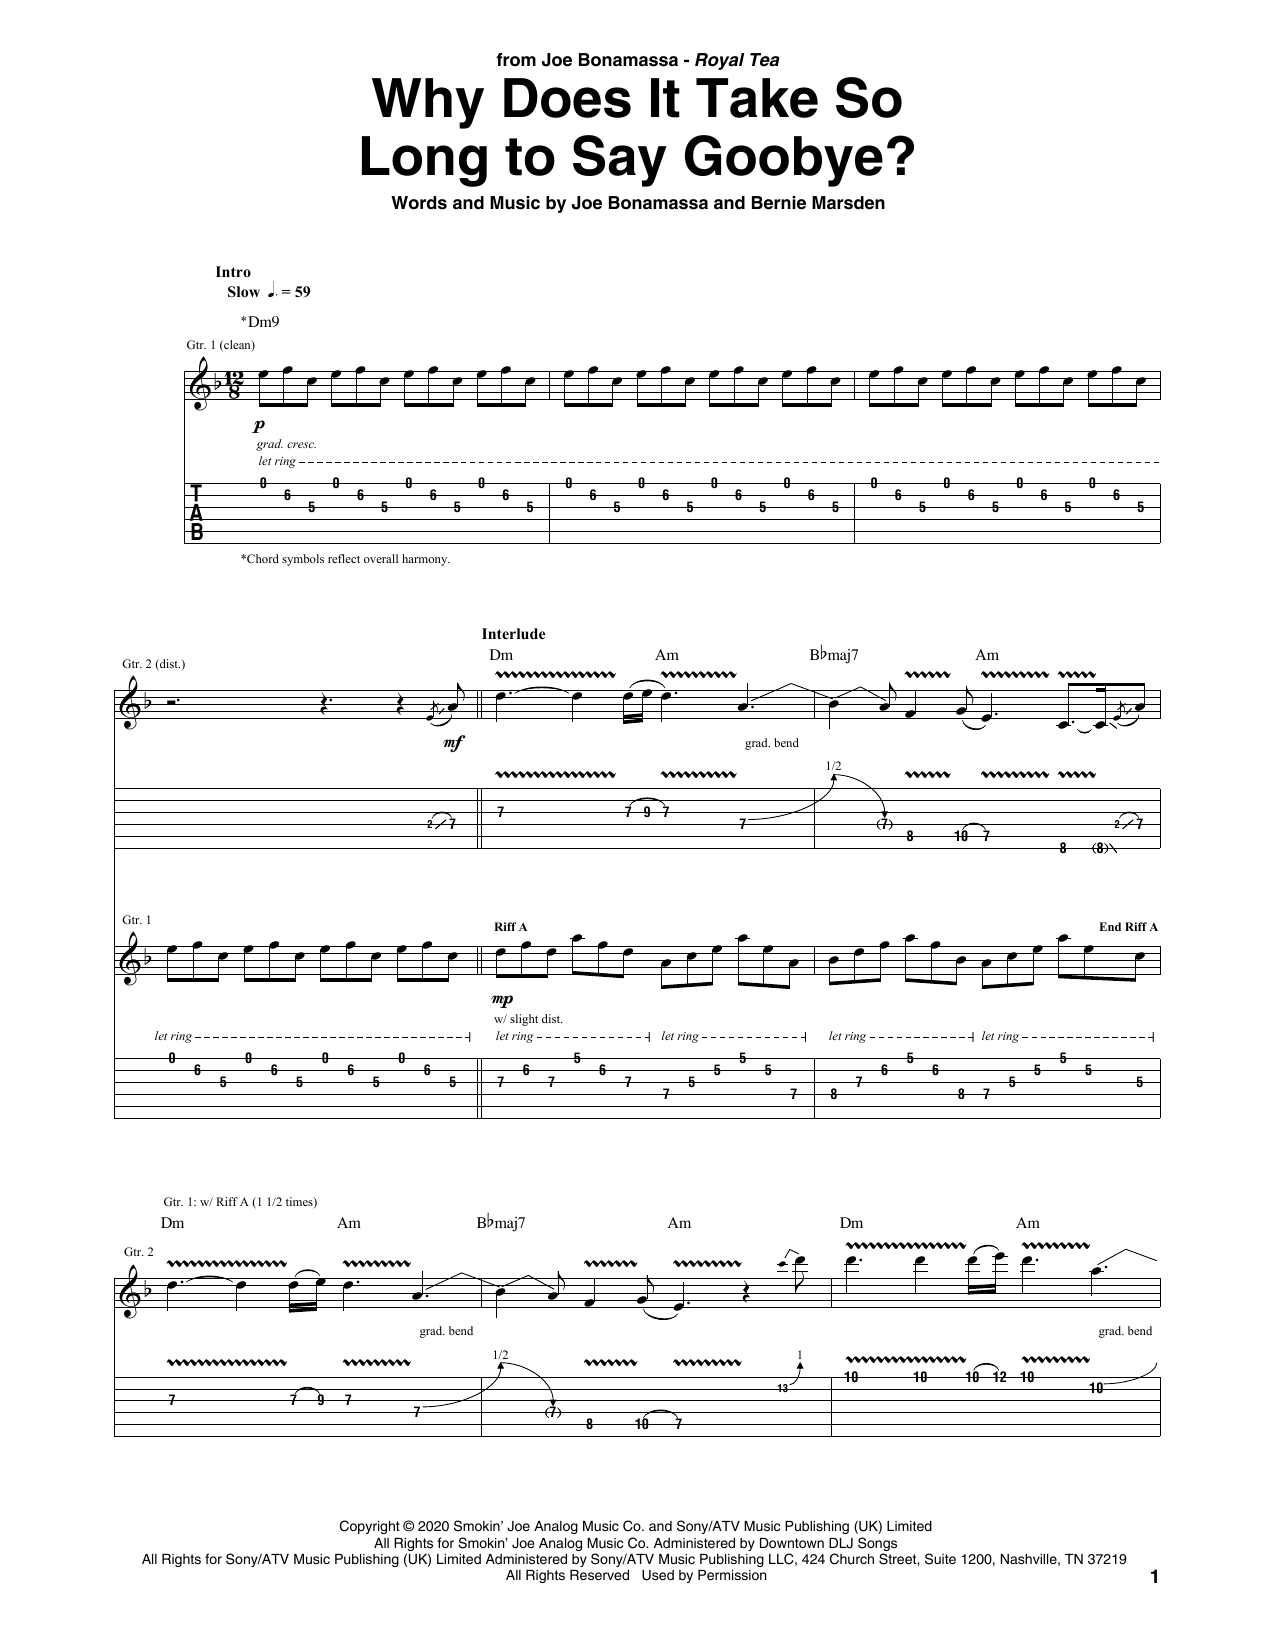 Joe Bonamassa Why Does It Take So Long To Say Goodbye? Sheet Music Notes & Chords for Guitar Tab - Download or Print PDF